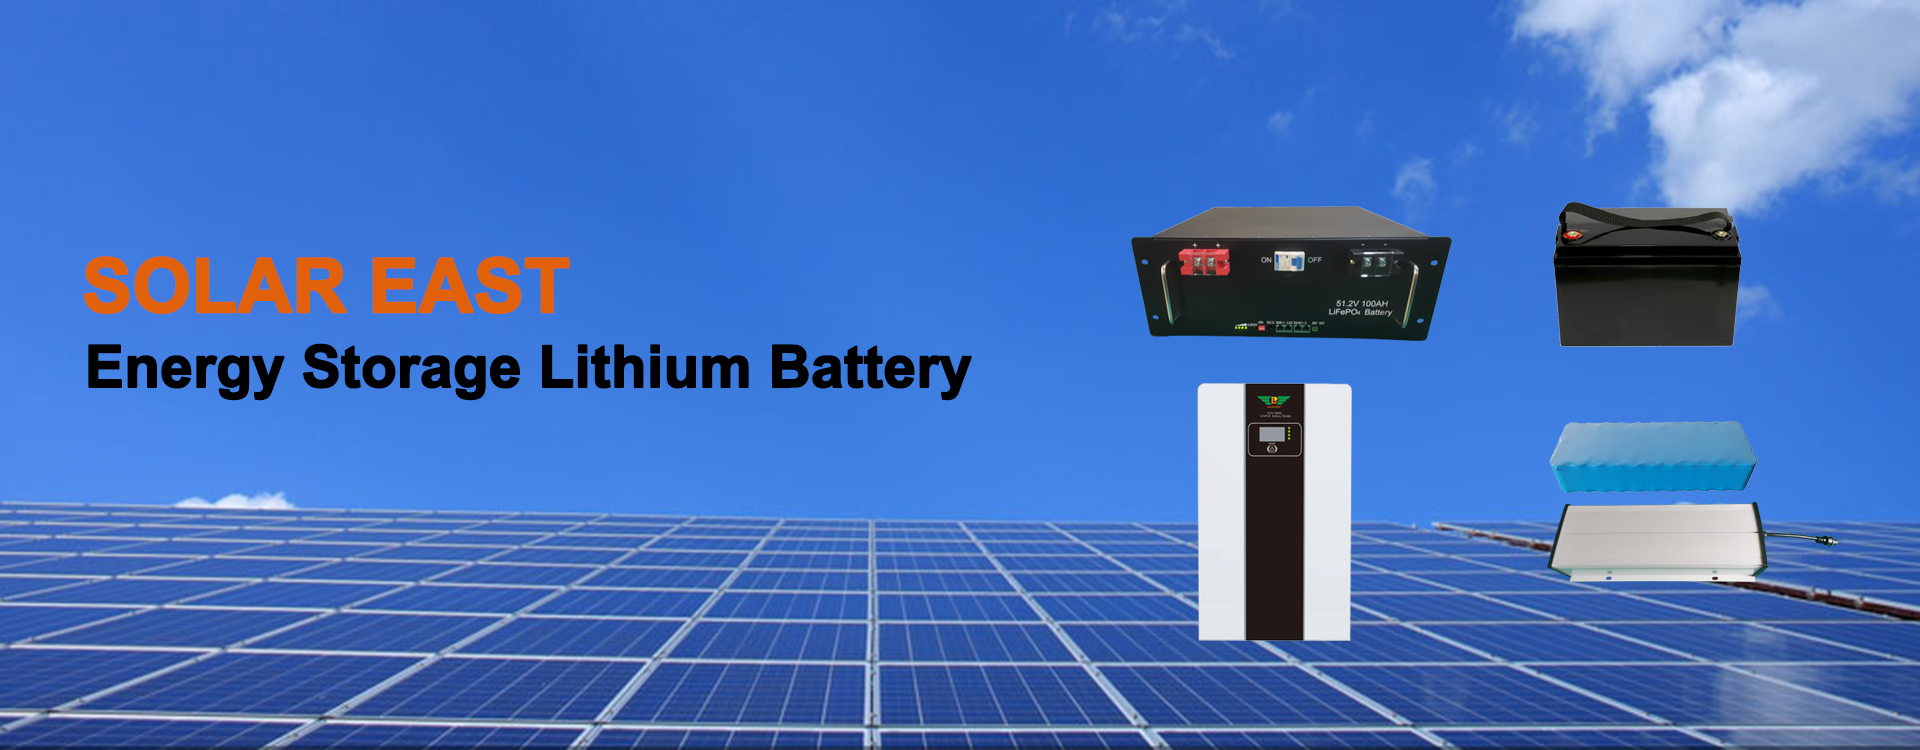 Energy Storage Liithium Battery